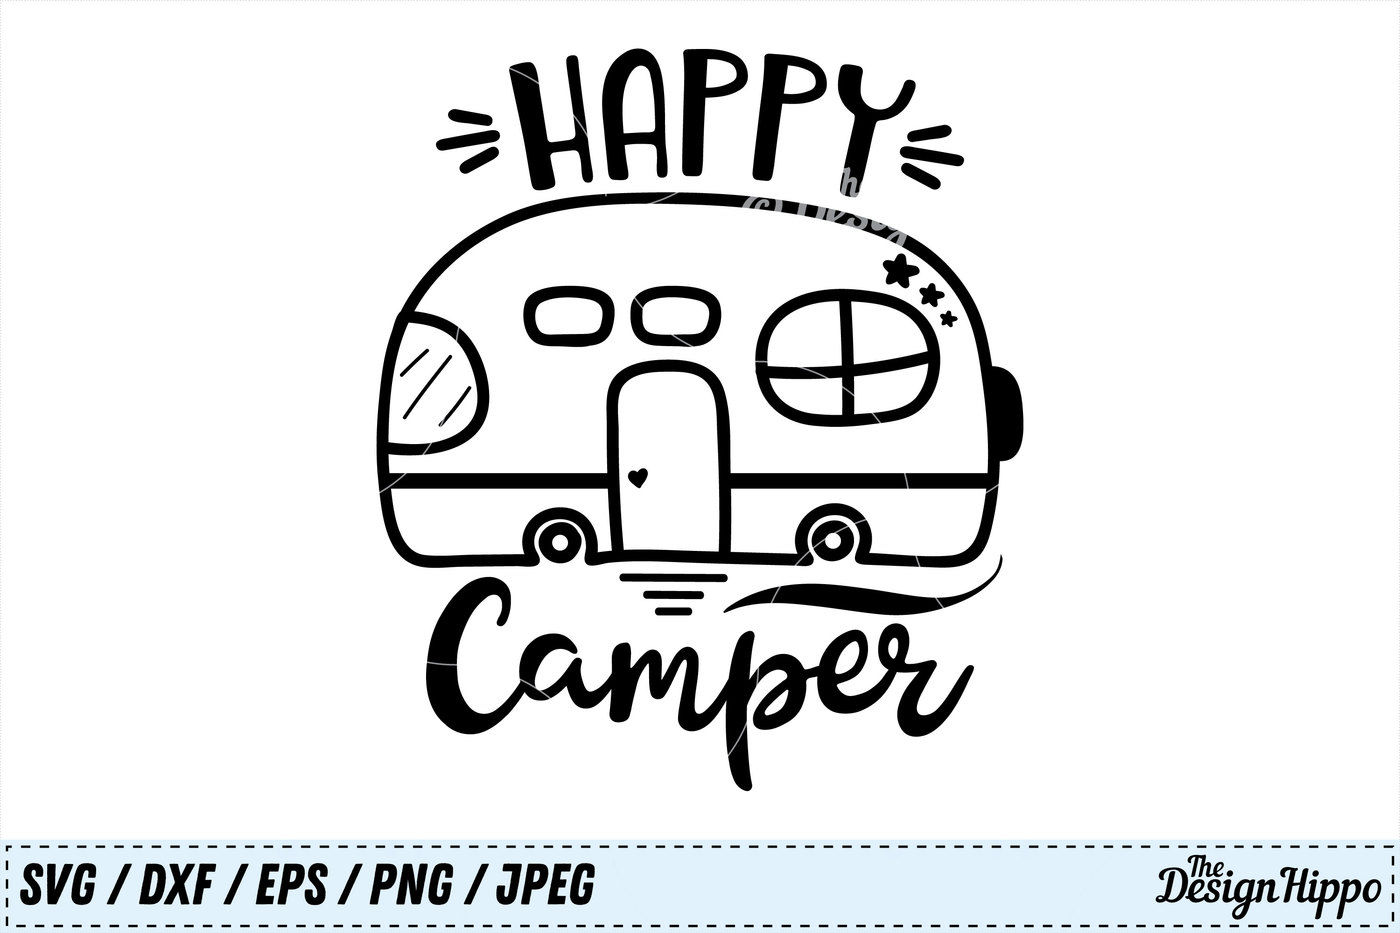 png Camp svg dxf Camping svg Camping Shirt svg Camp svg Bundle Camping svg Bundle Camping svg Files Camping Bundle svg Camper svg